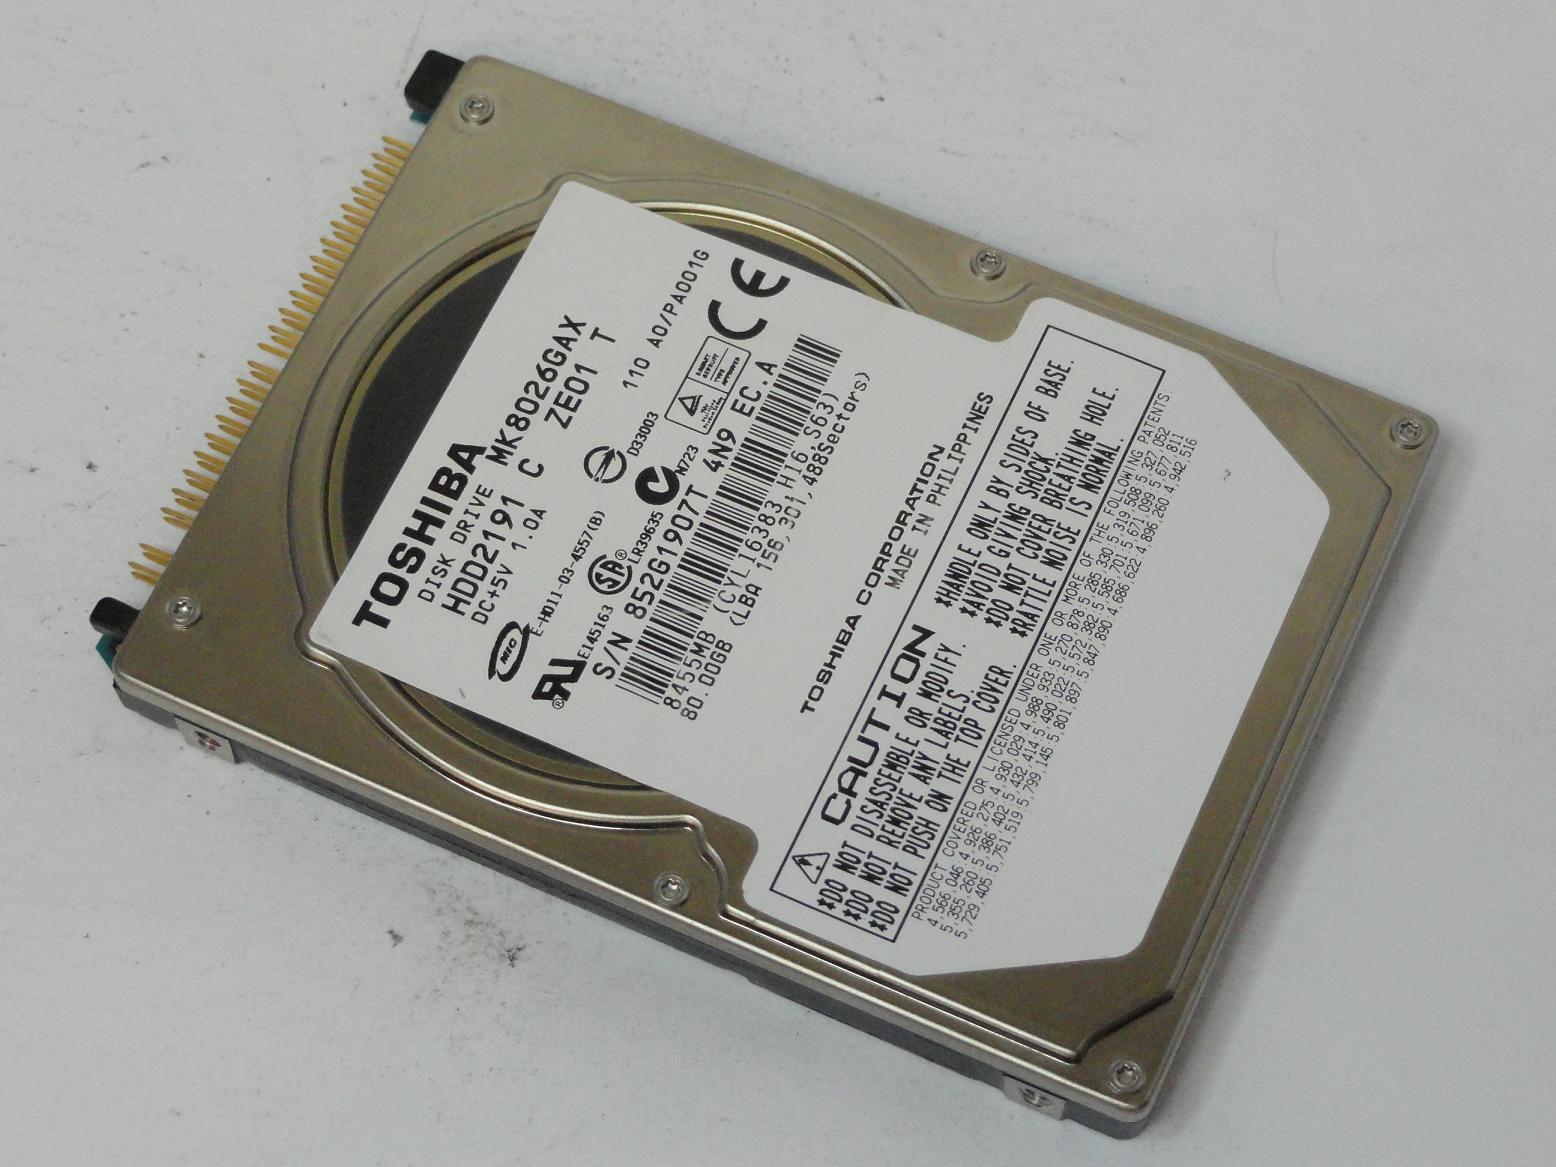 HDD2191 - Toshiba 80GB IDE 5400rpm 2.5in HDD - Refurbished